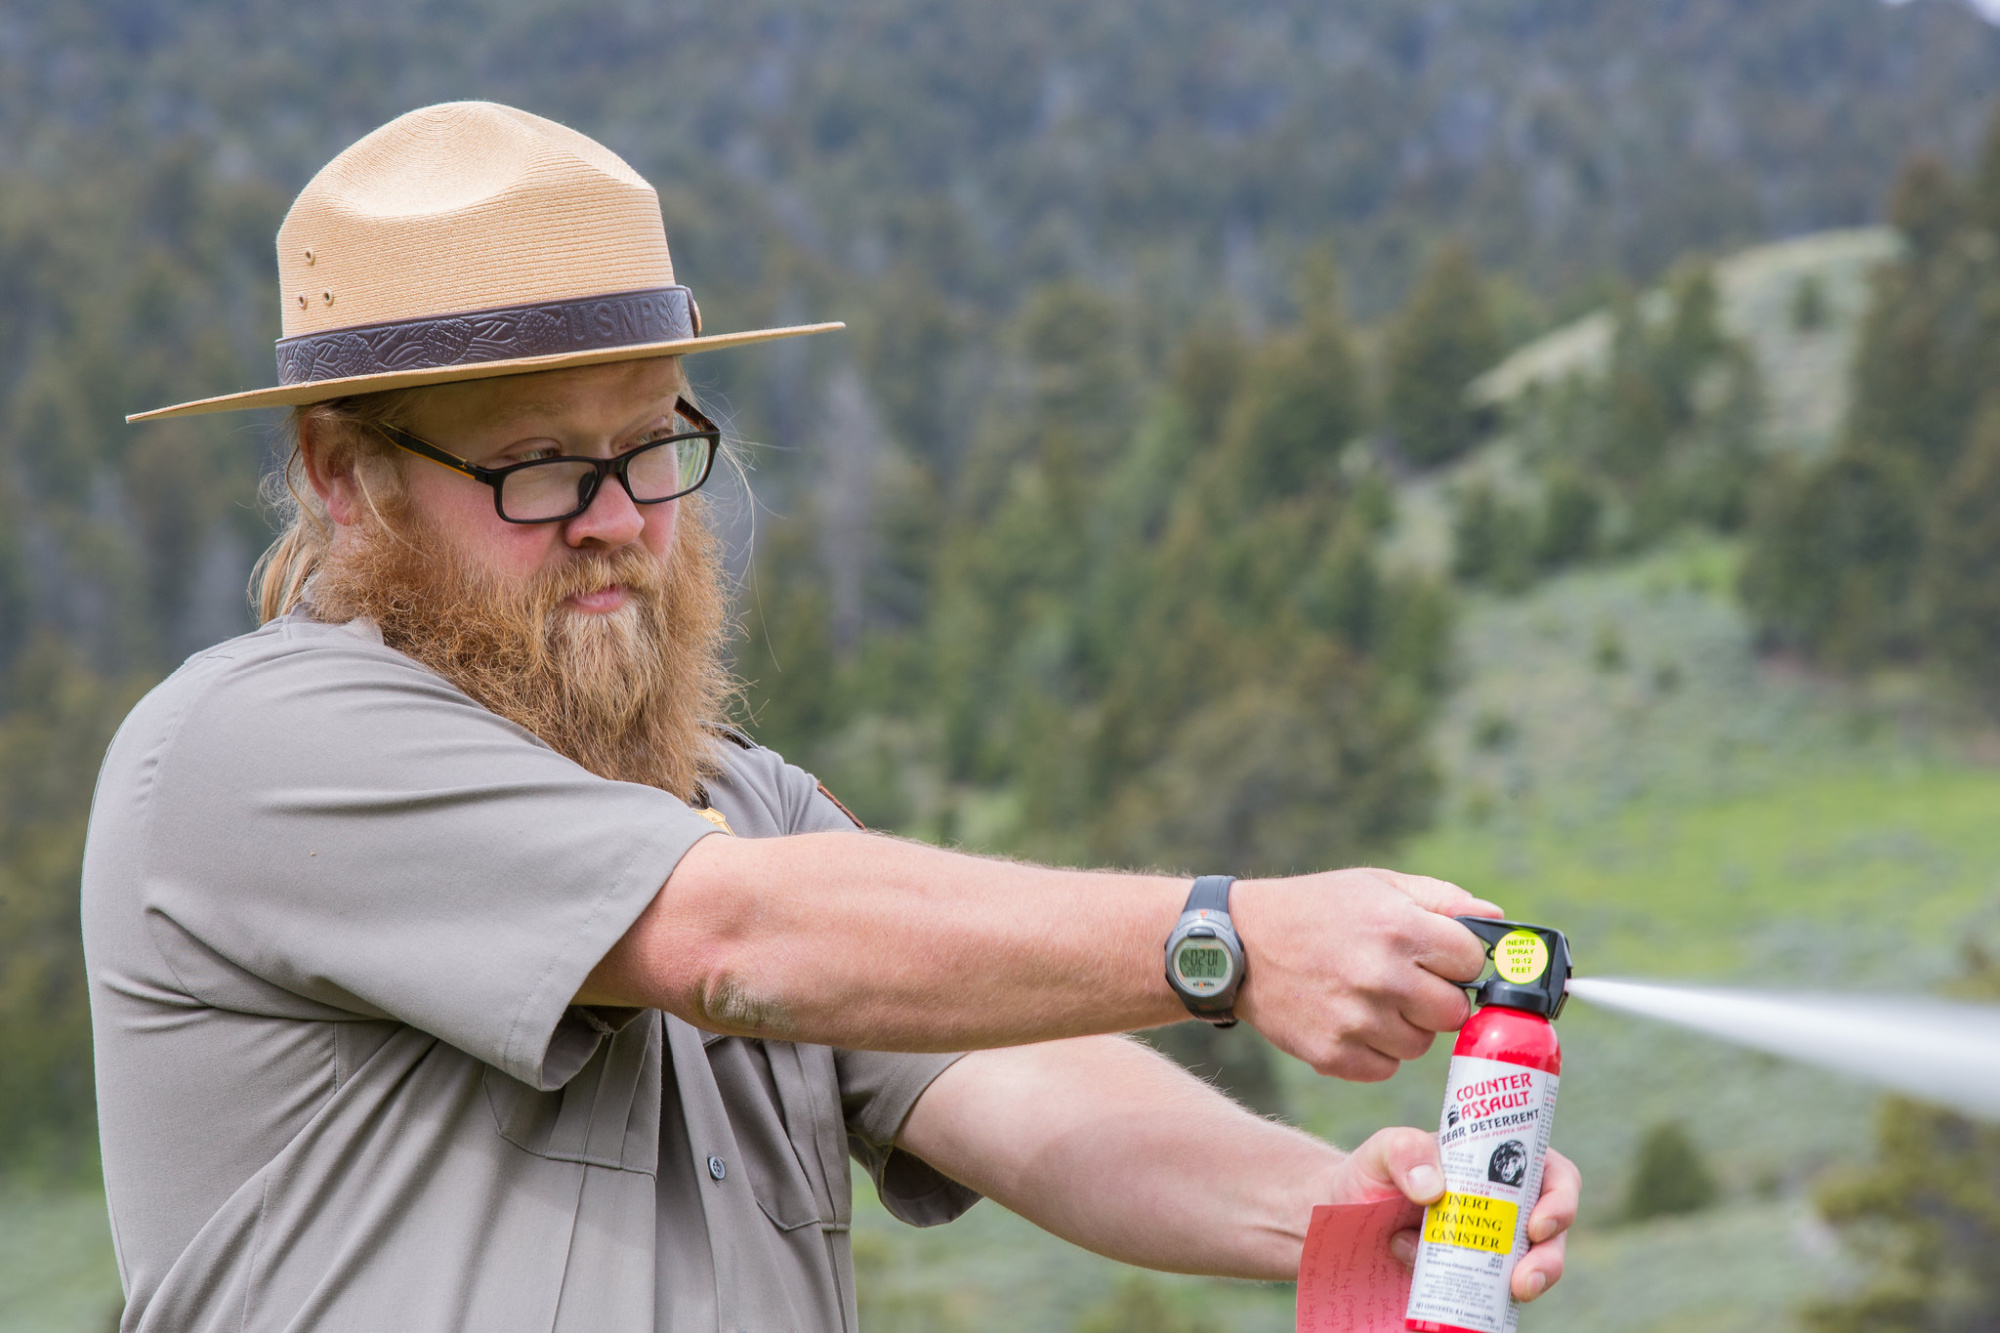 A National Park Service ranger deploys a can of bear spray.